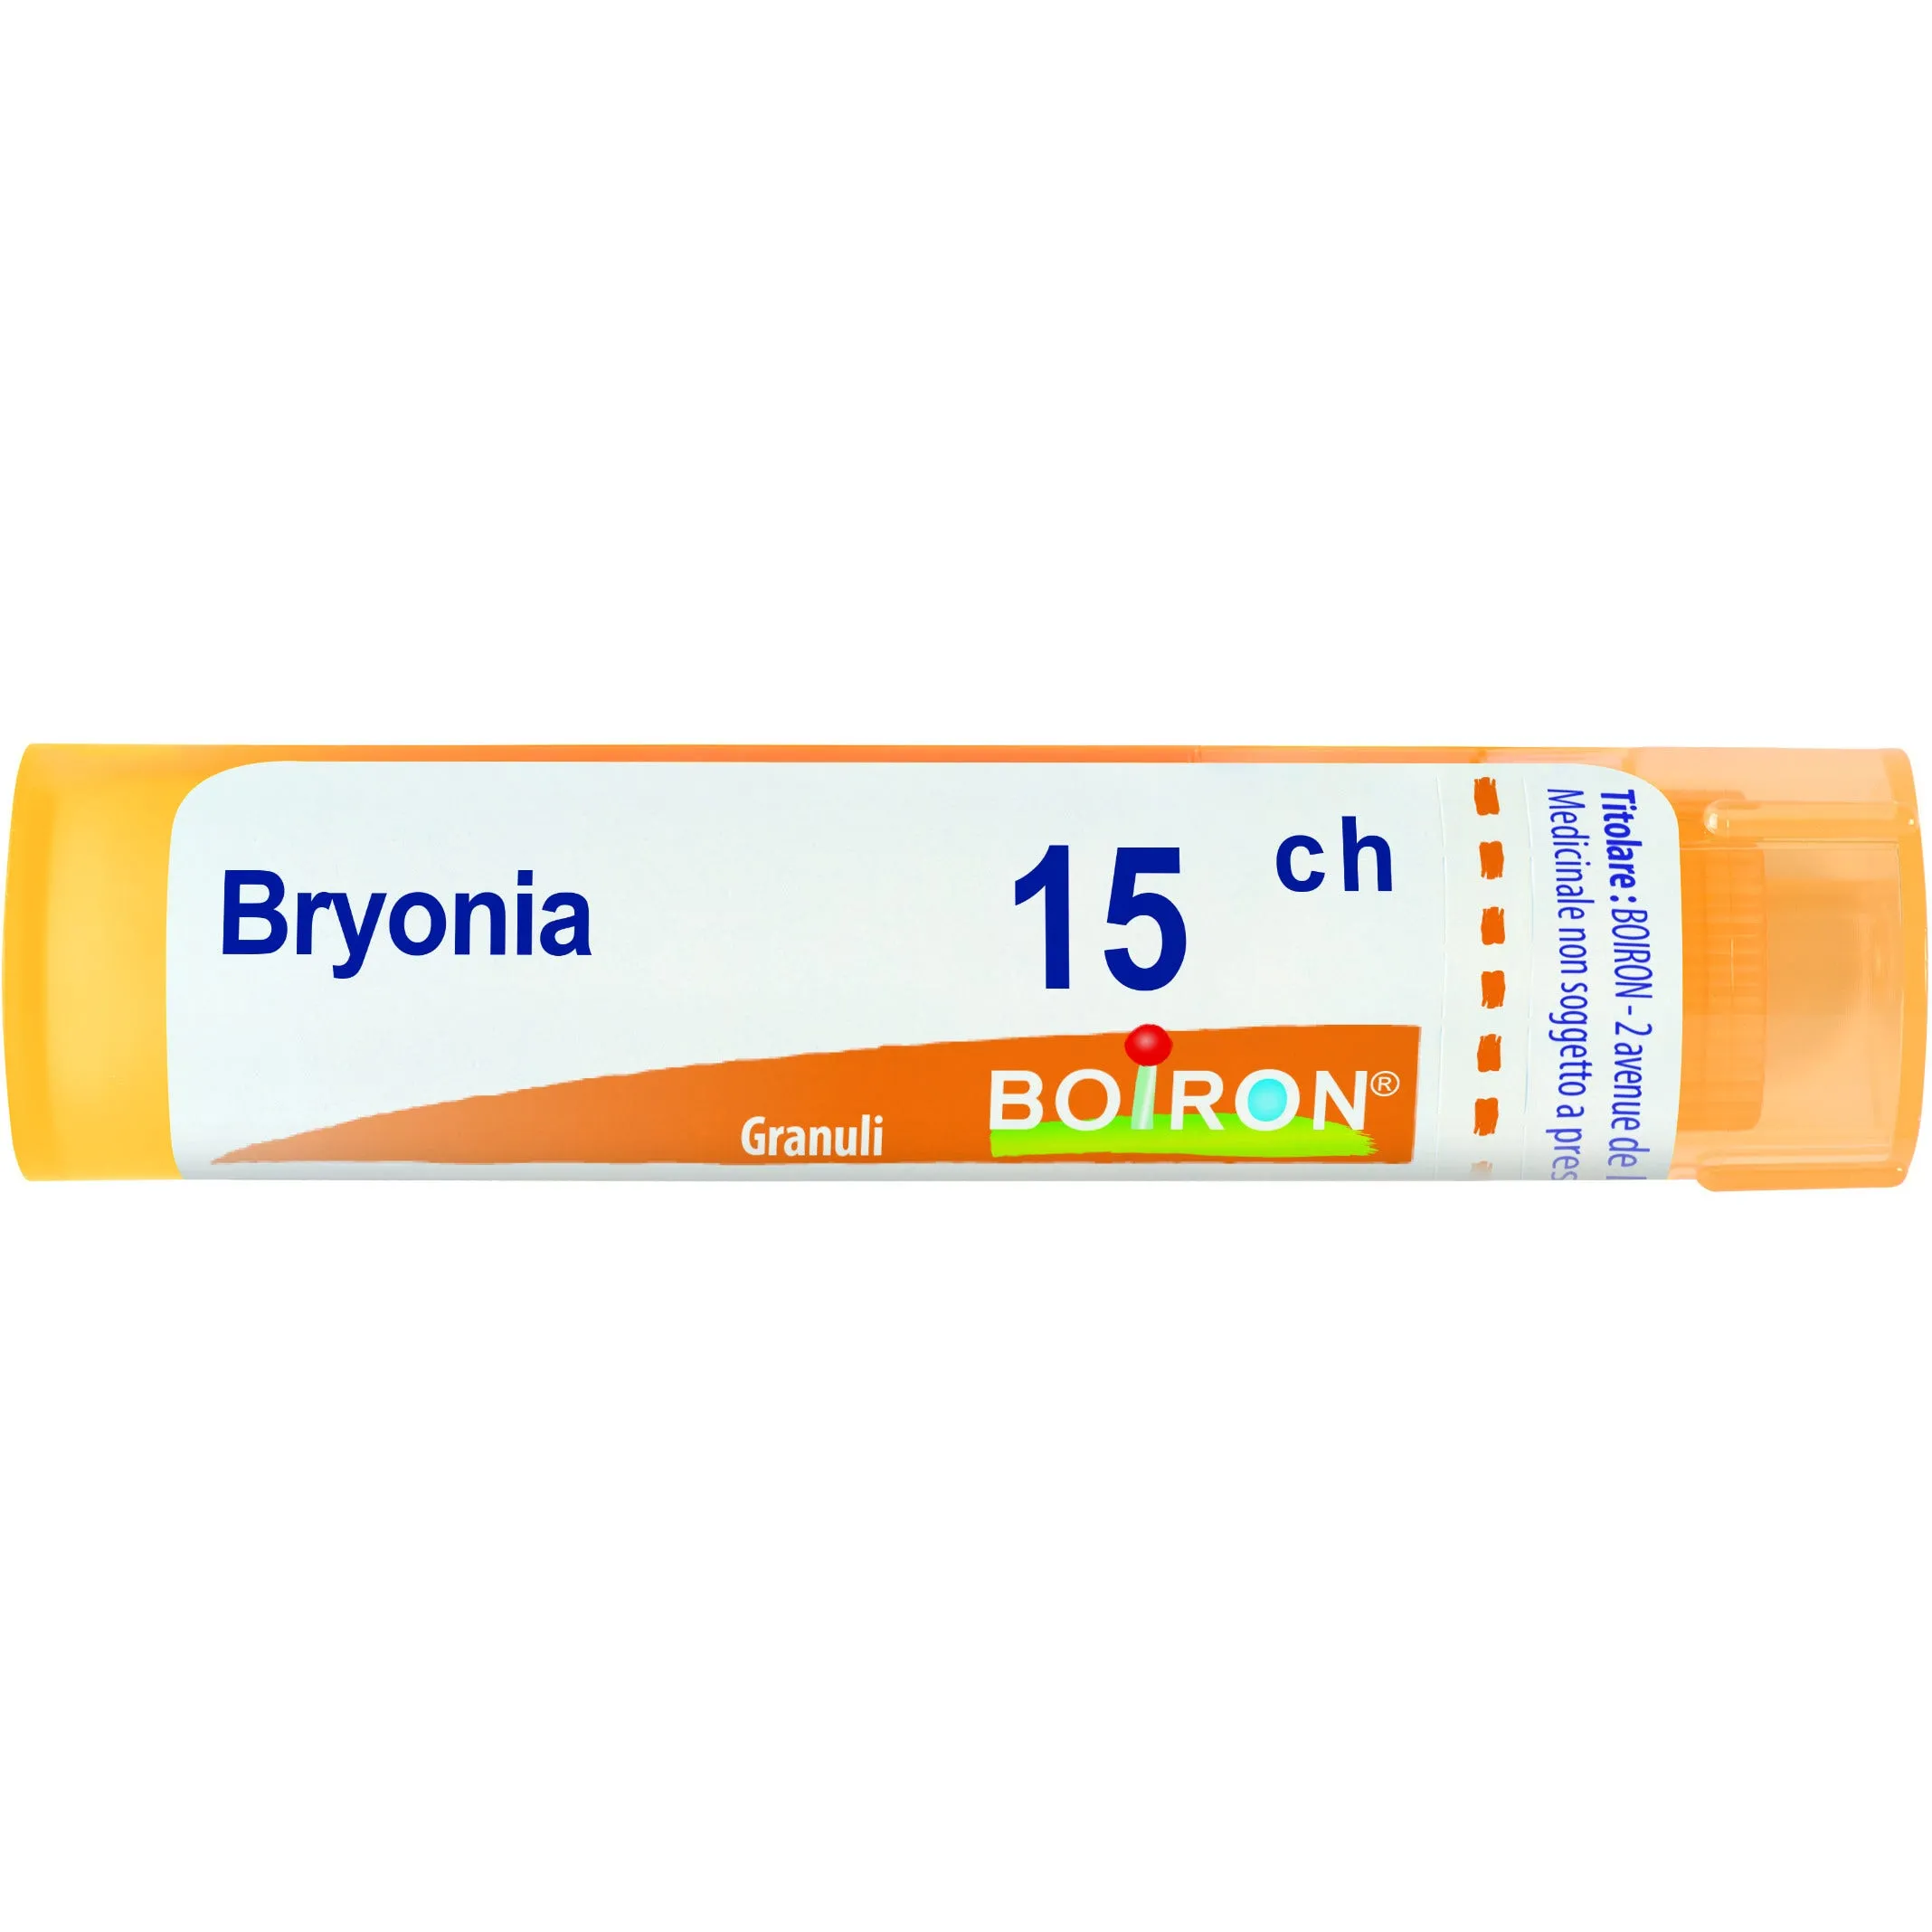 Bryonia Granuli 15 Ch Contenitore Multidose